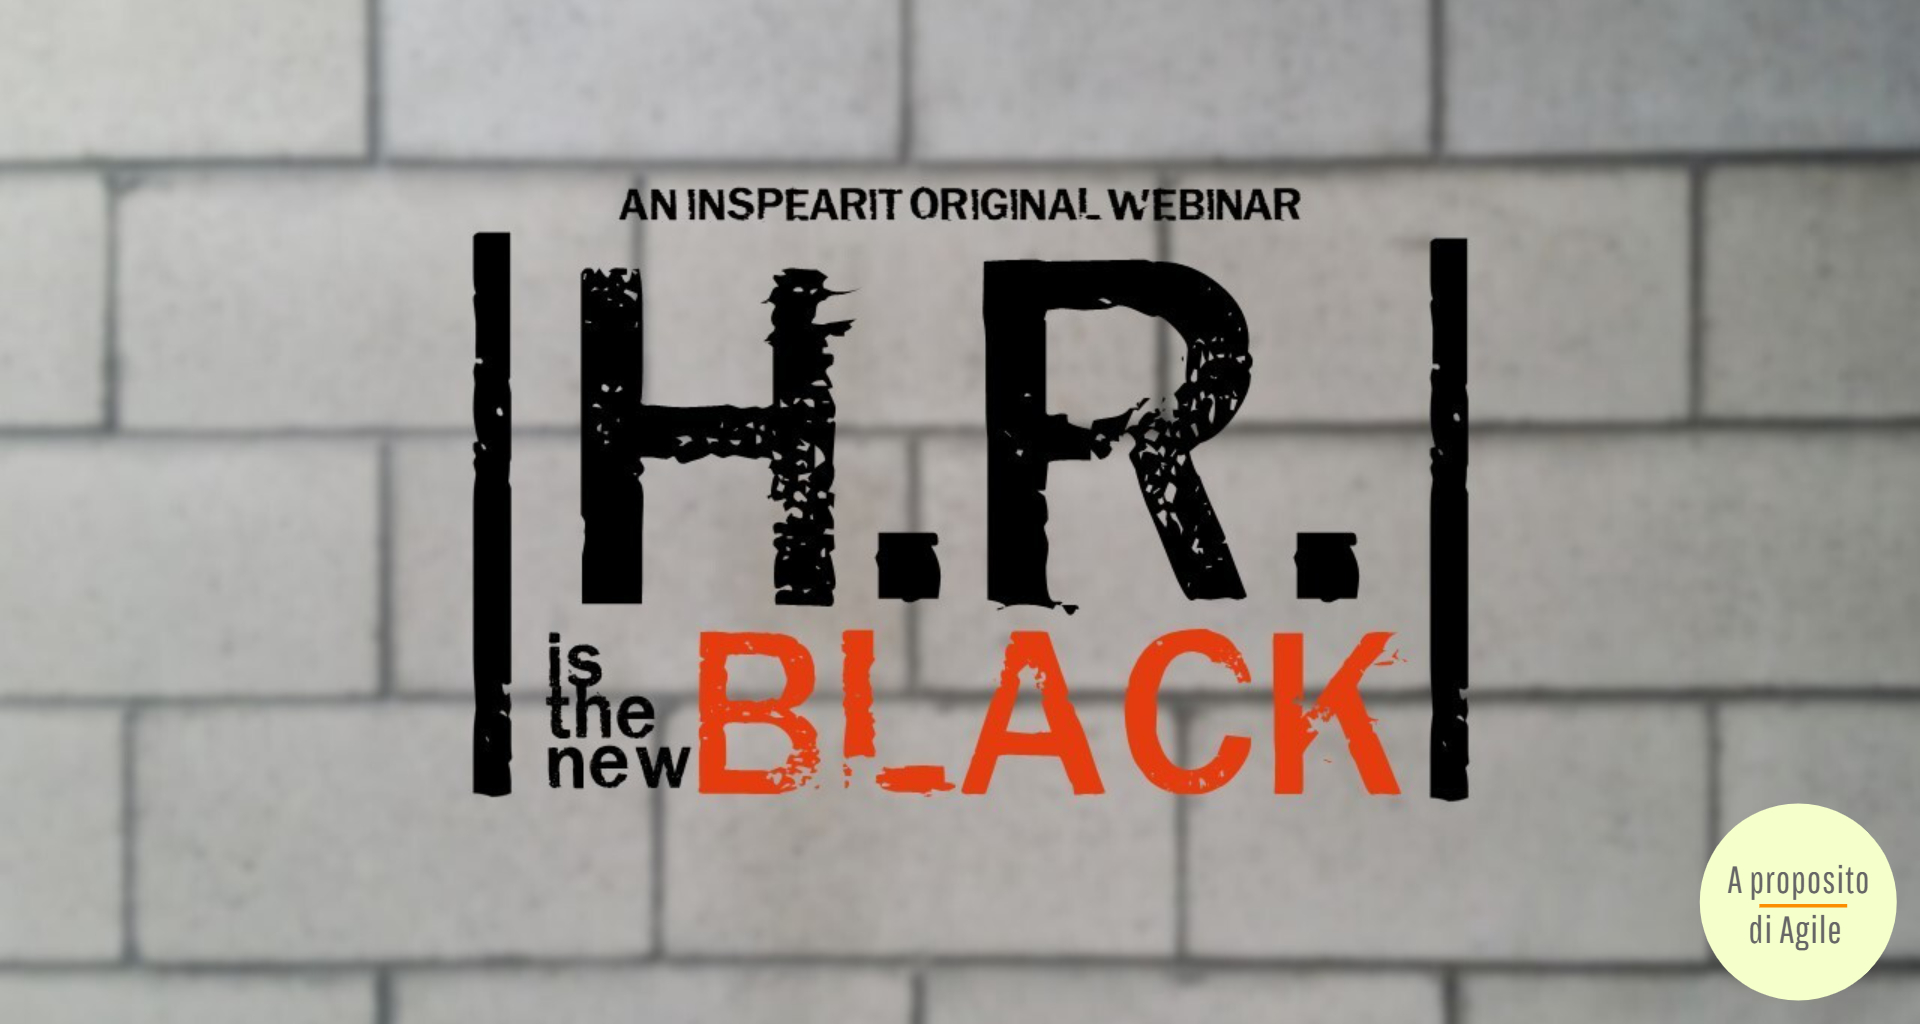 HR is the new black - Webinar - inspearit - A proposito di agile